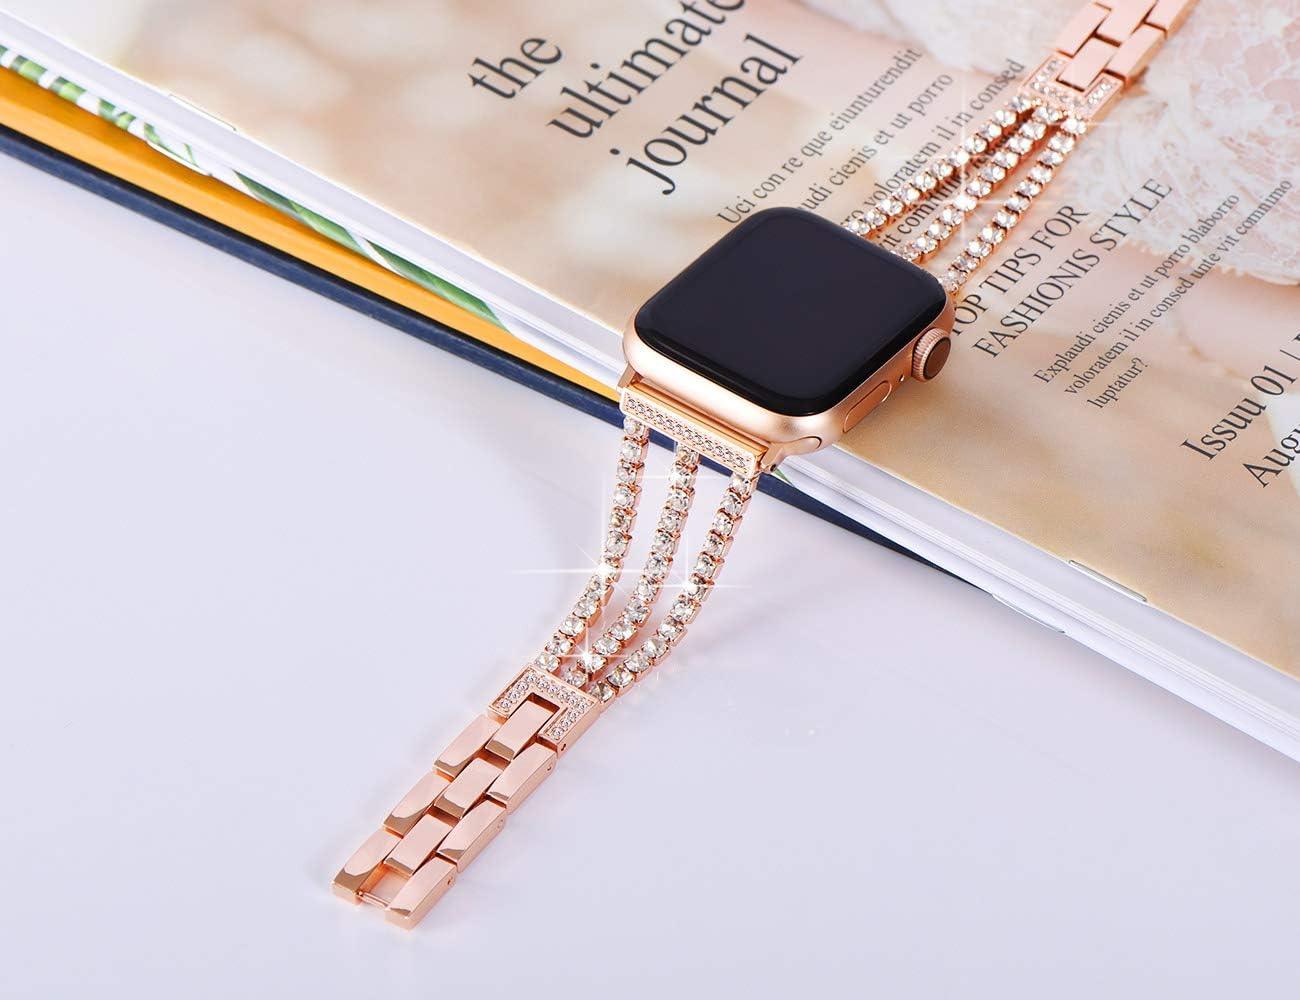 FR Fashion Co. Apple Watch Bling Bracelet - FR Fashion Co. 